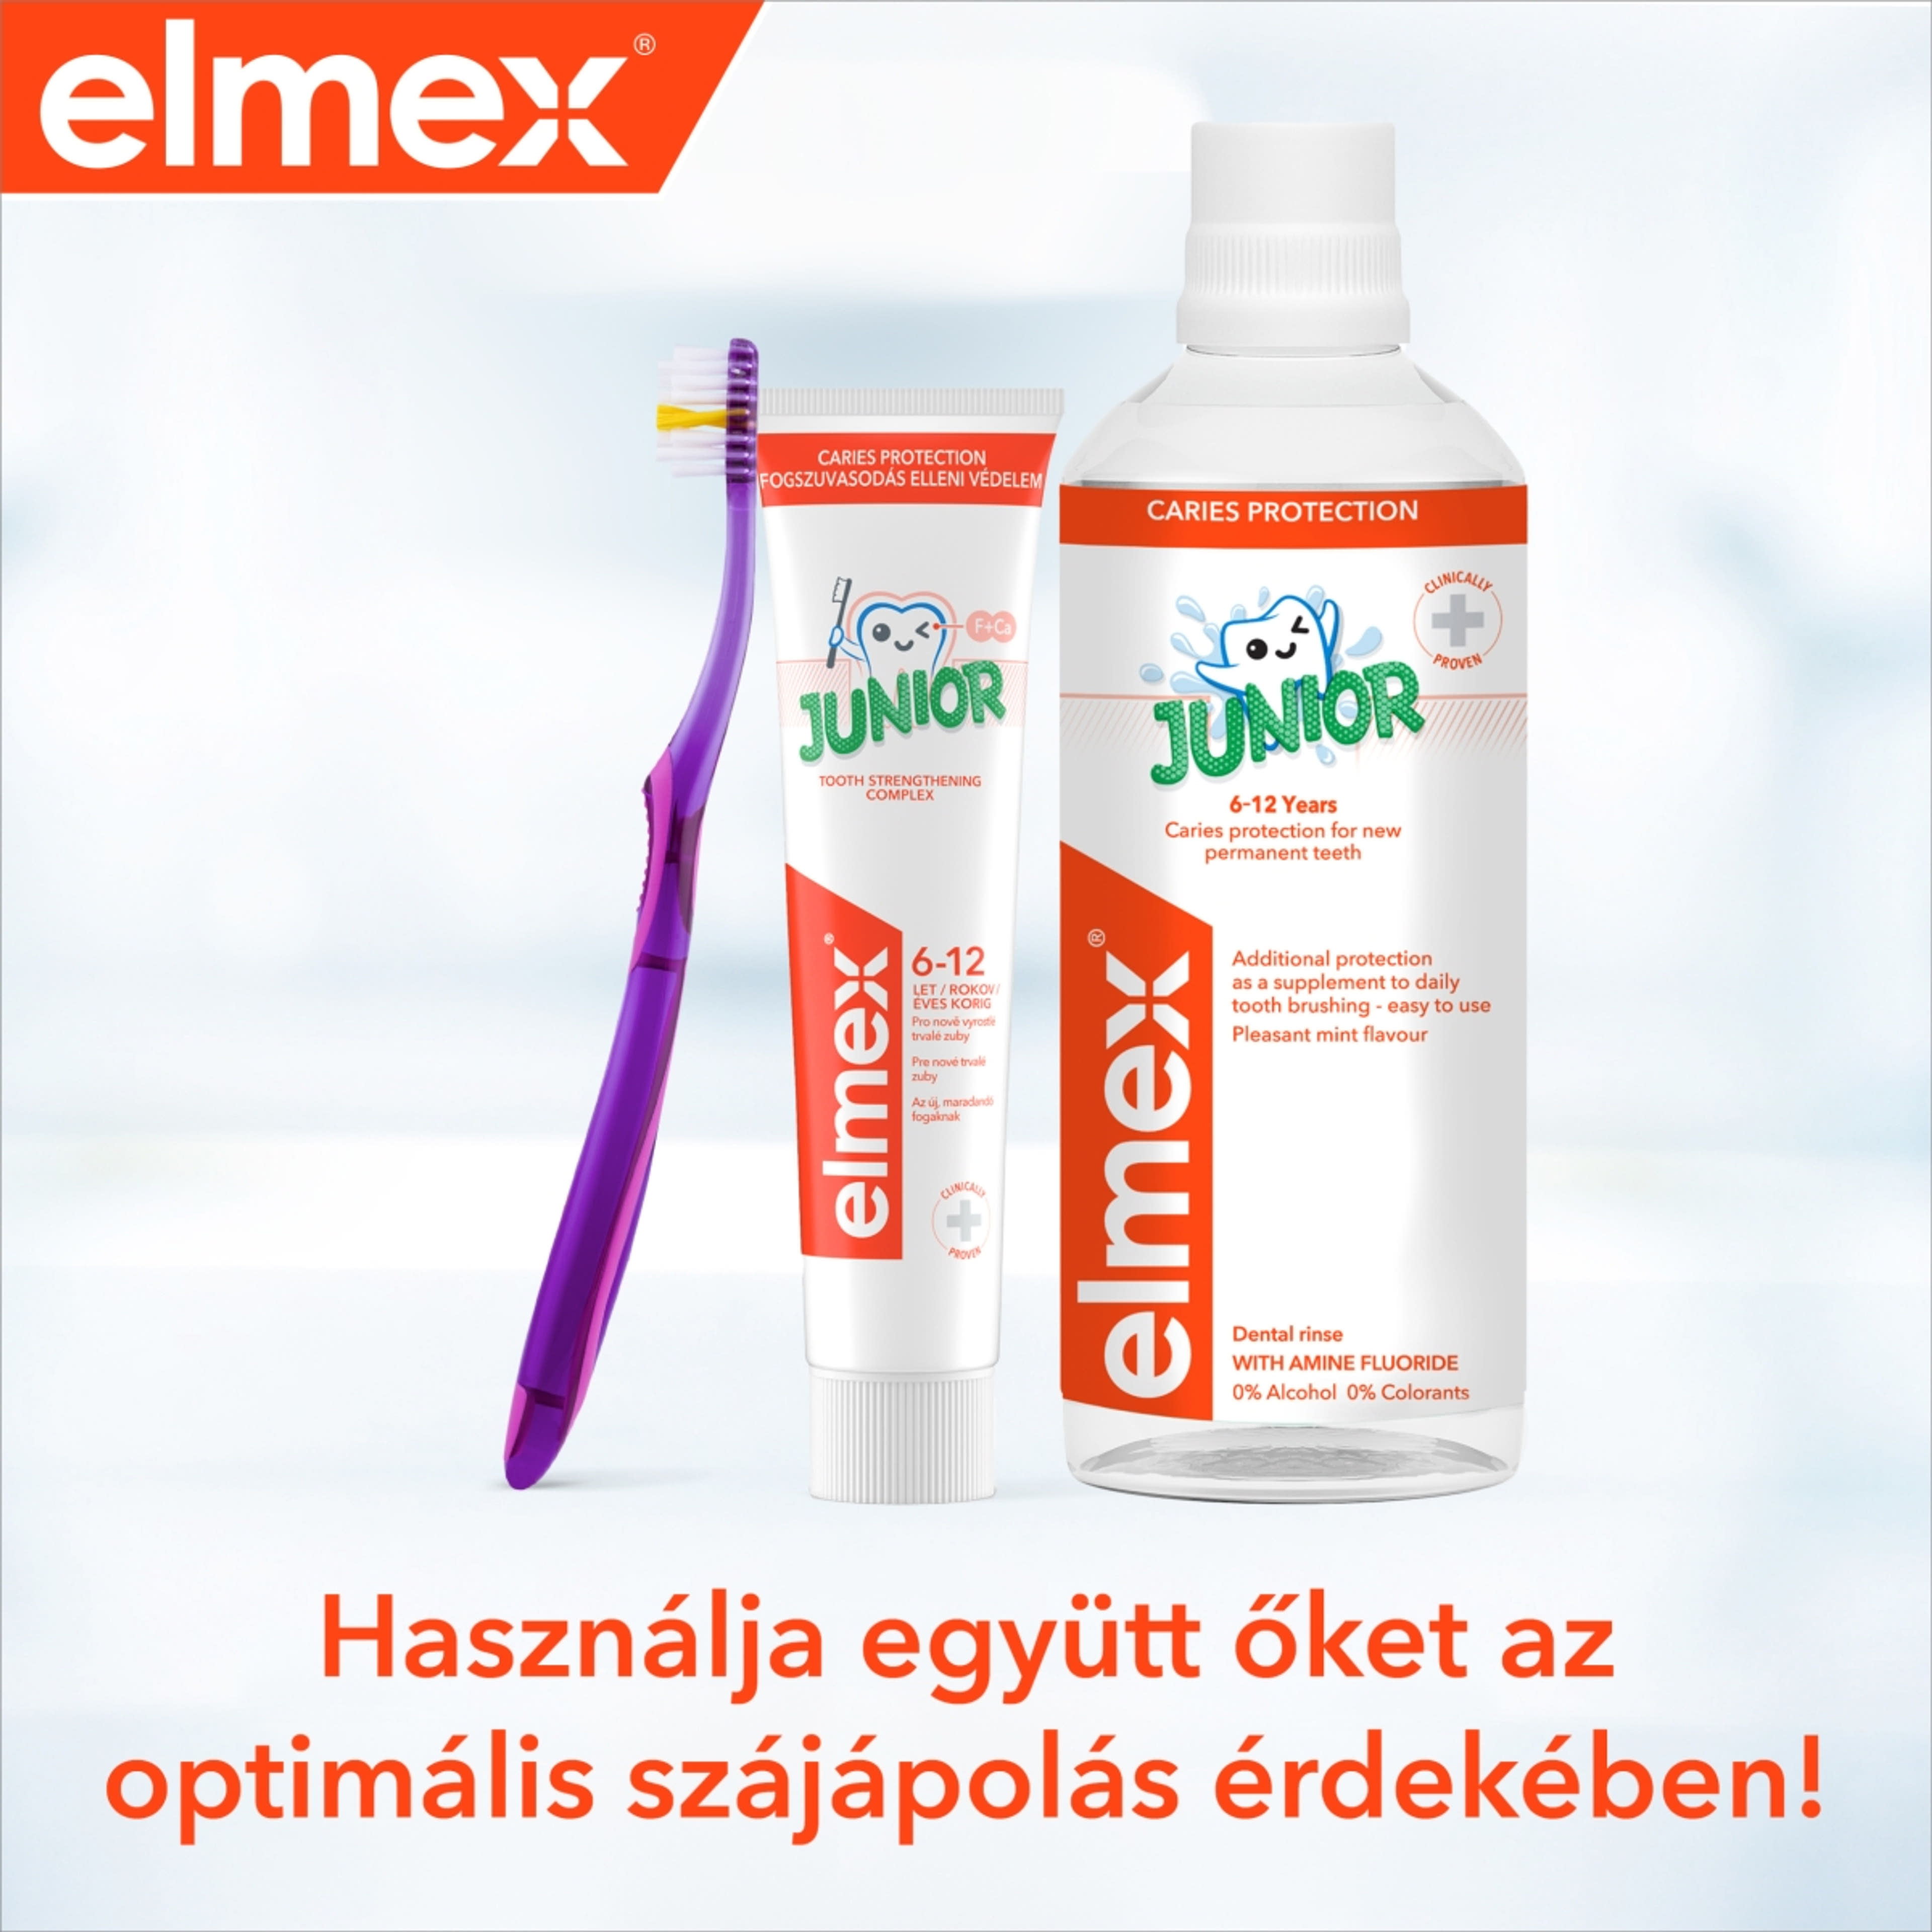 Elmex Junior fogkrém 6-12 éves korig - 75 ml-8